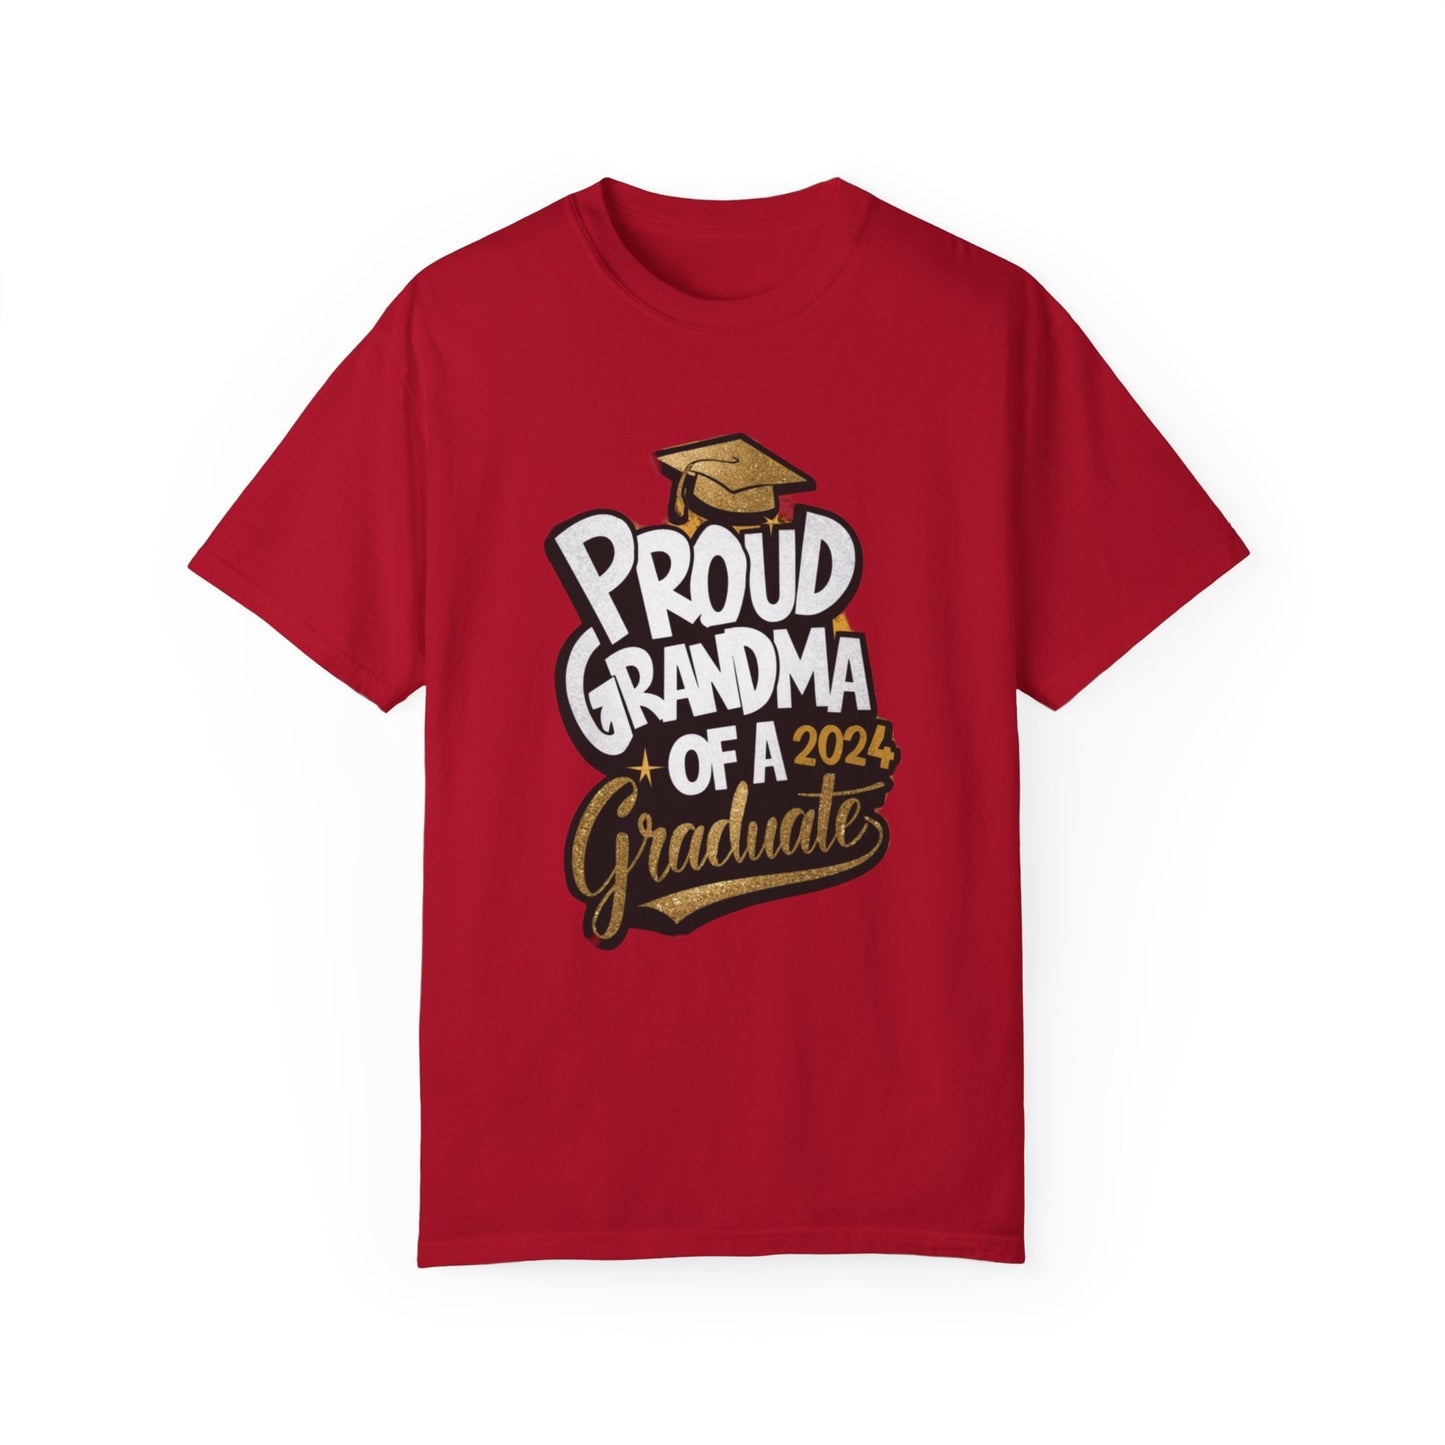 Proud of Grandma 2024 Graduate Unisex Garment-dyed T-shirt Cotton Funny Humorous Graphic Soft Premium Unisex Men Women Red T-shirt Birthday Gift-2